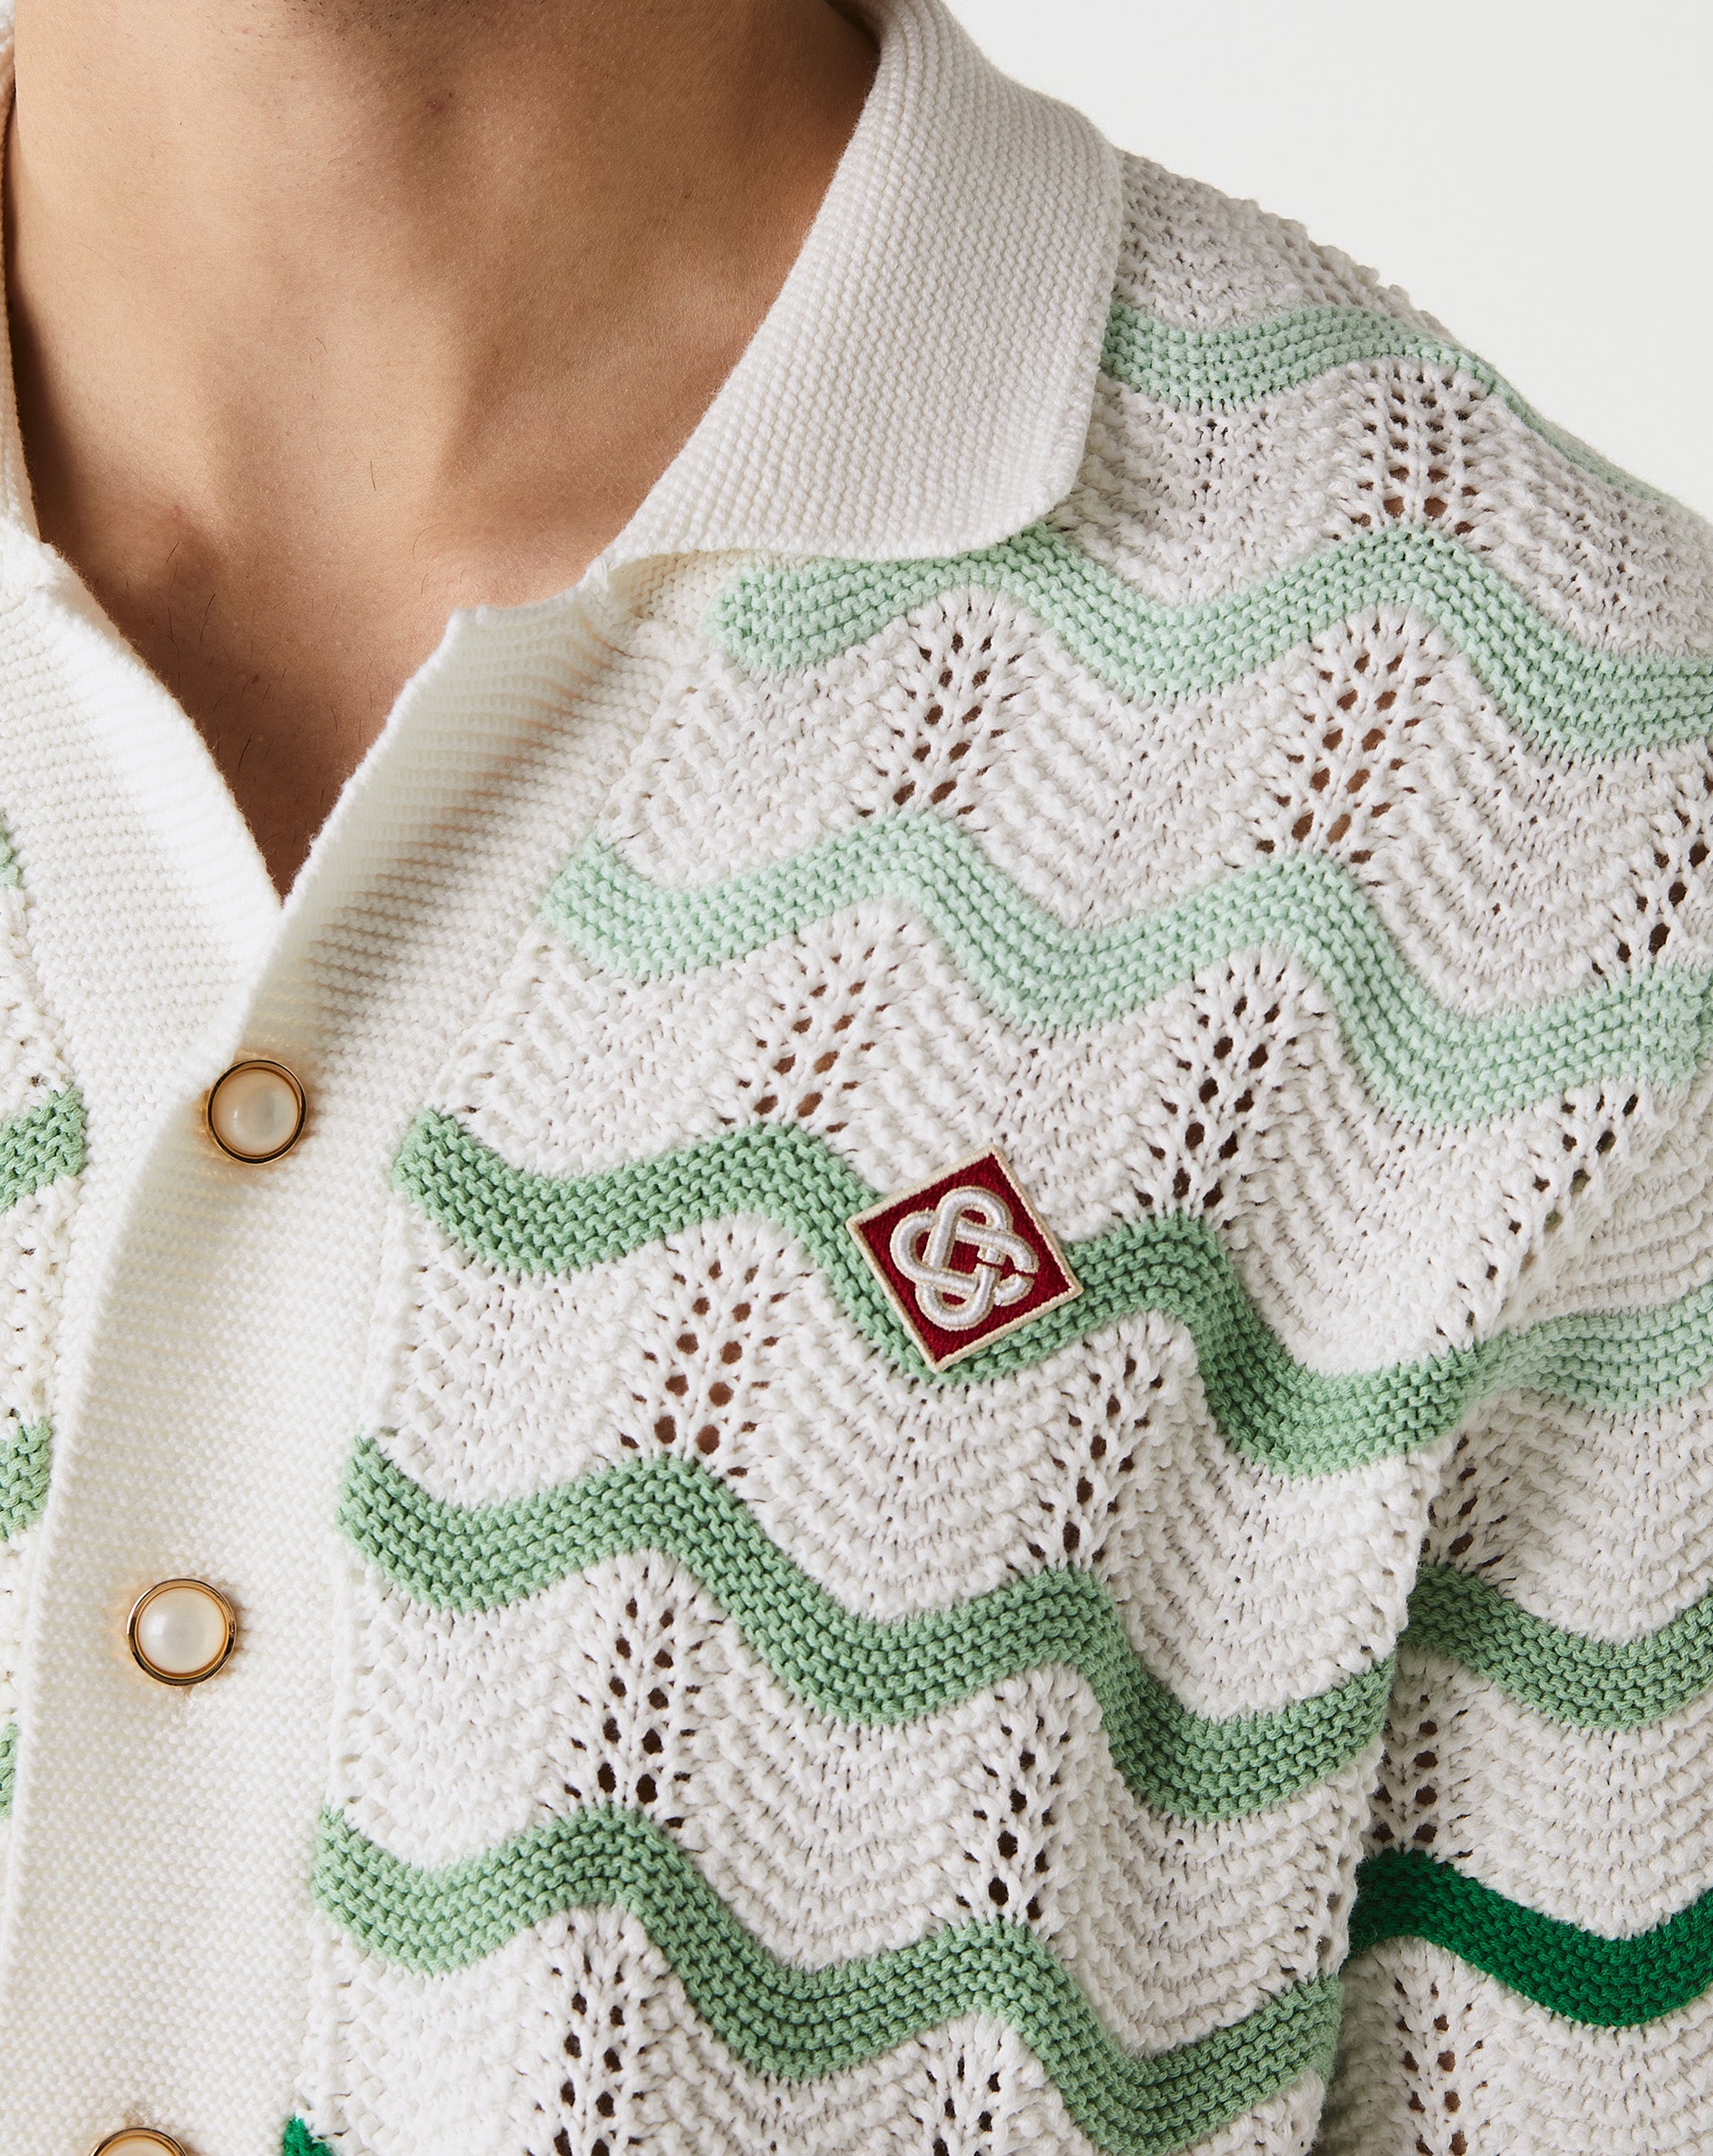 Casablanca shirt a manches courtes puma x emoji homme  - Cheap 127-0 Jordan outlet